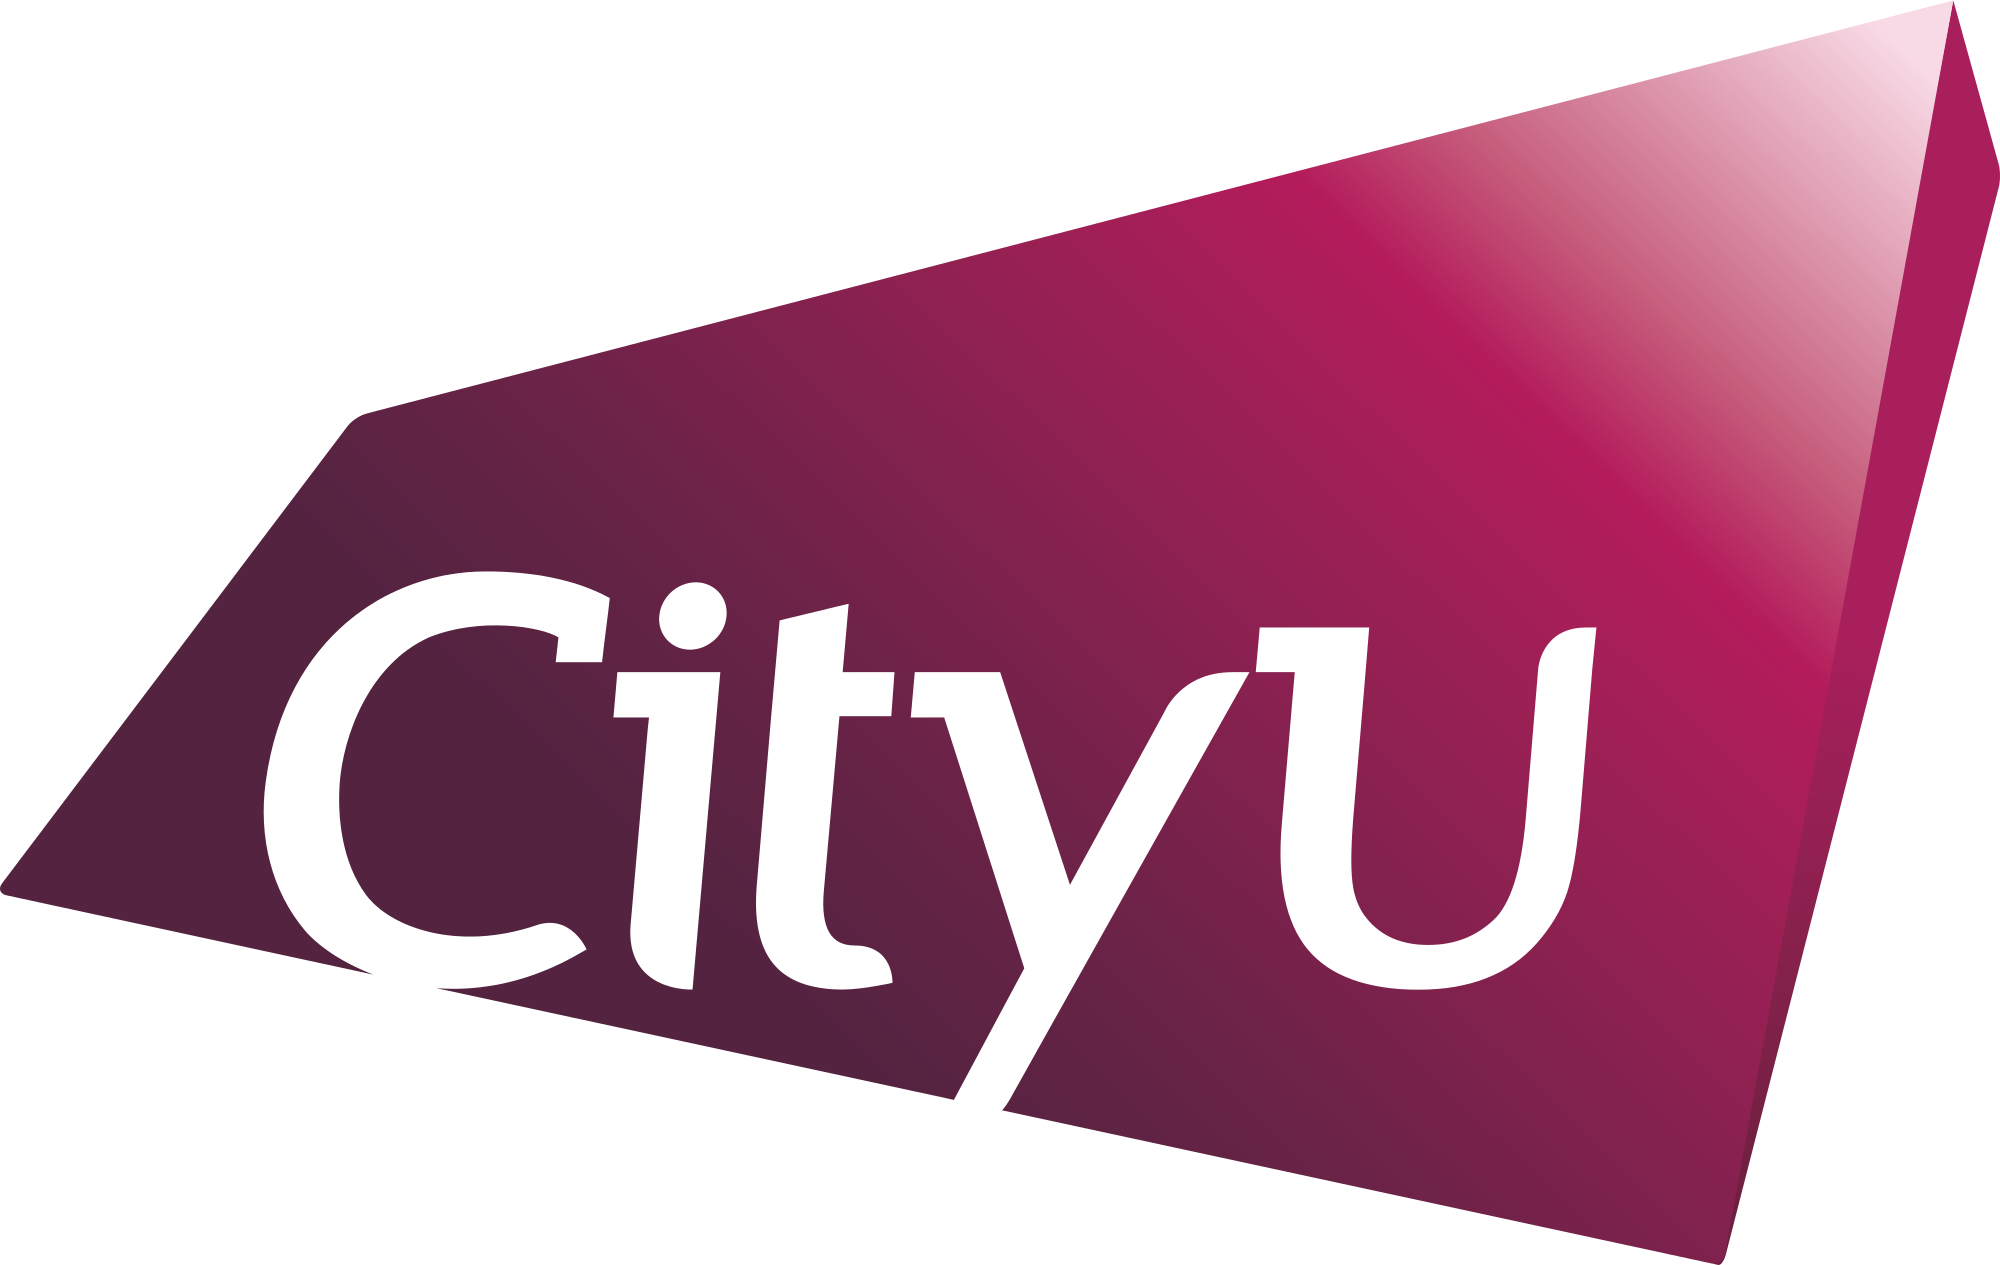 CityU_logo_2015.svg.png